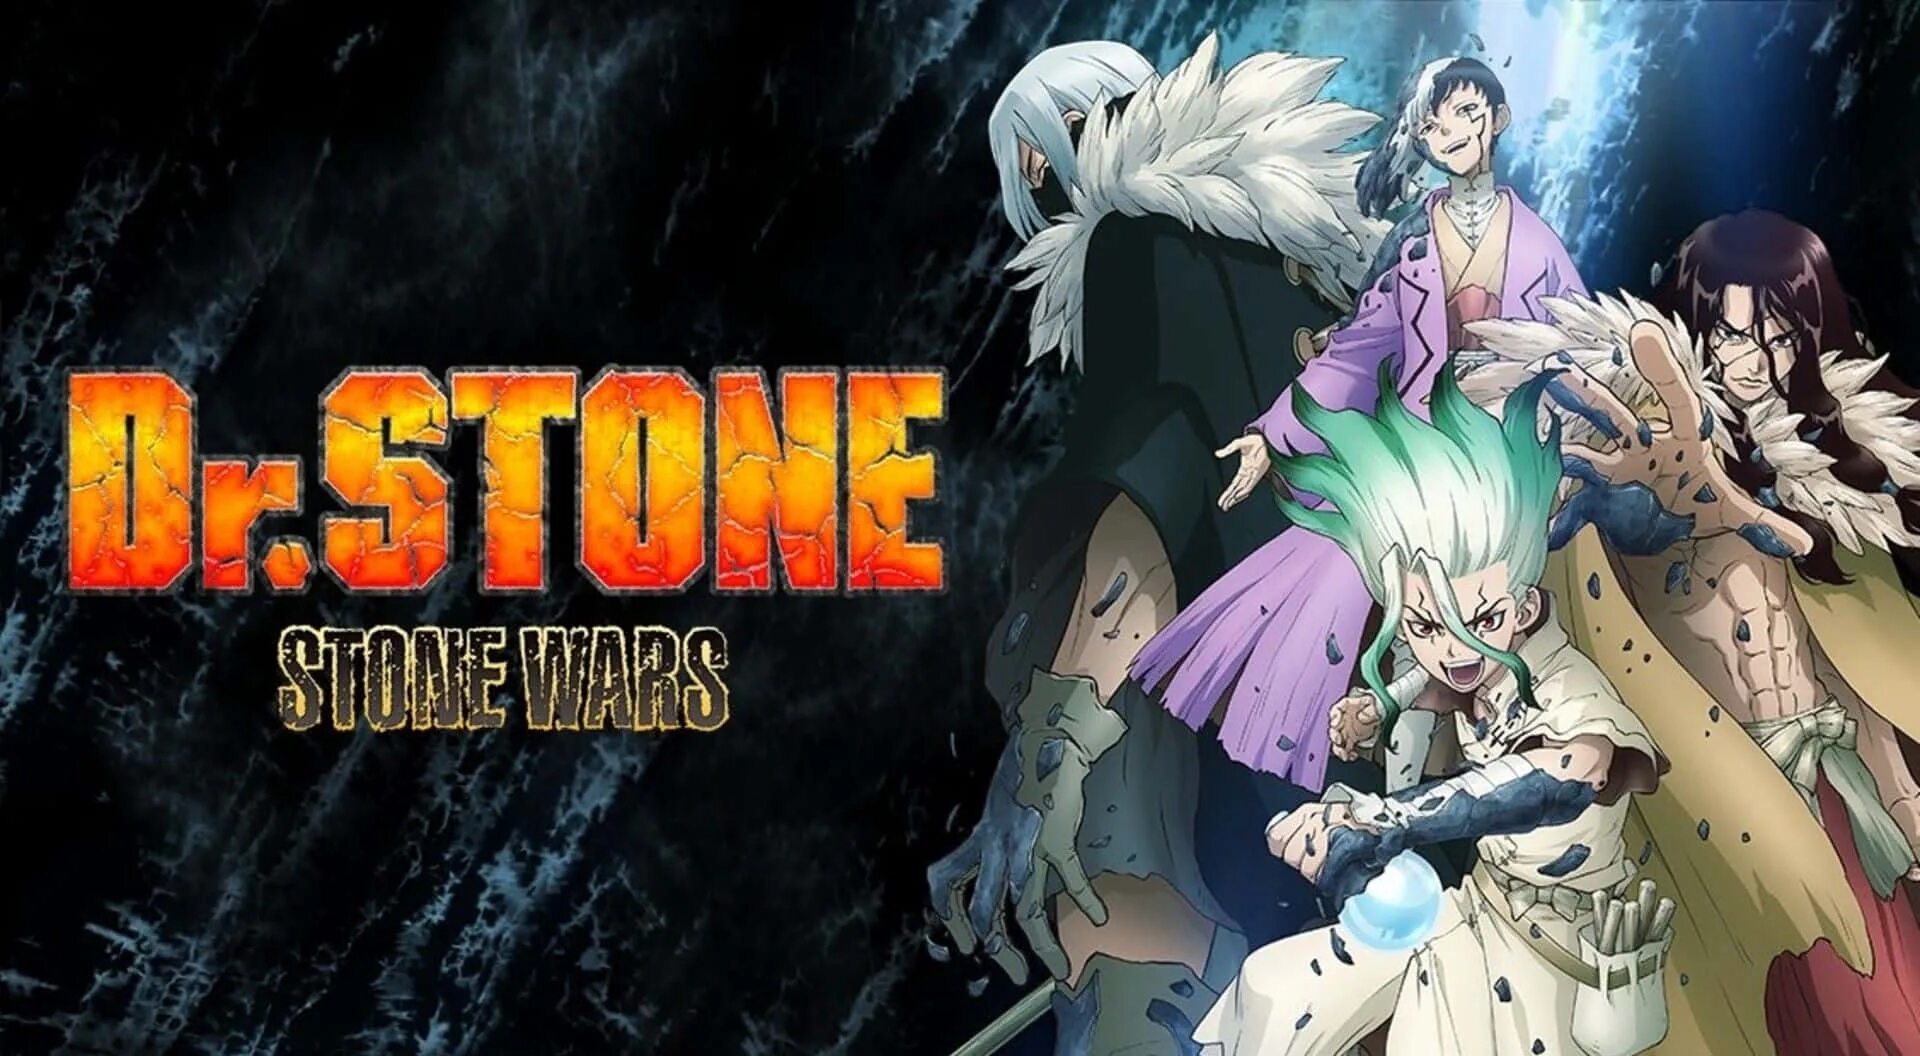 Stone wars